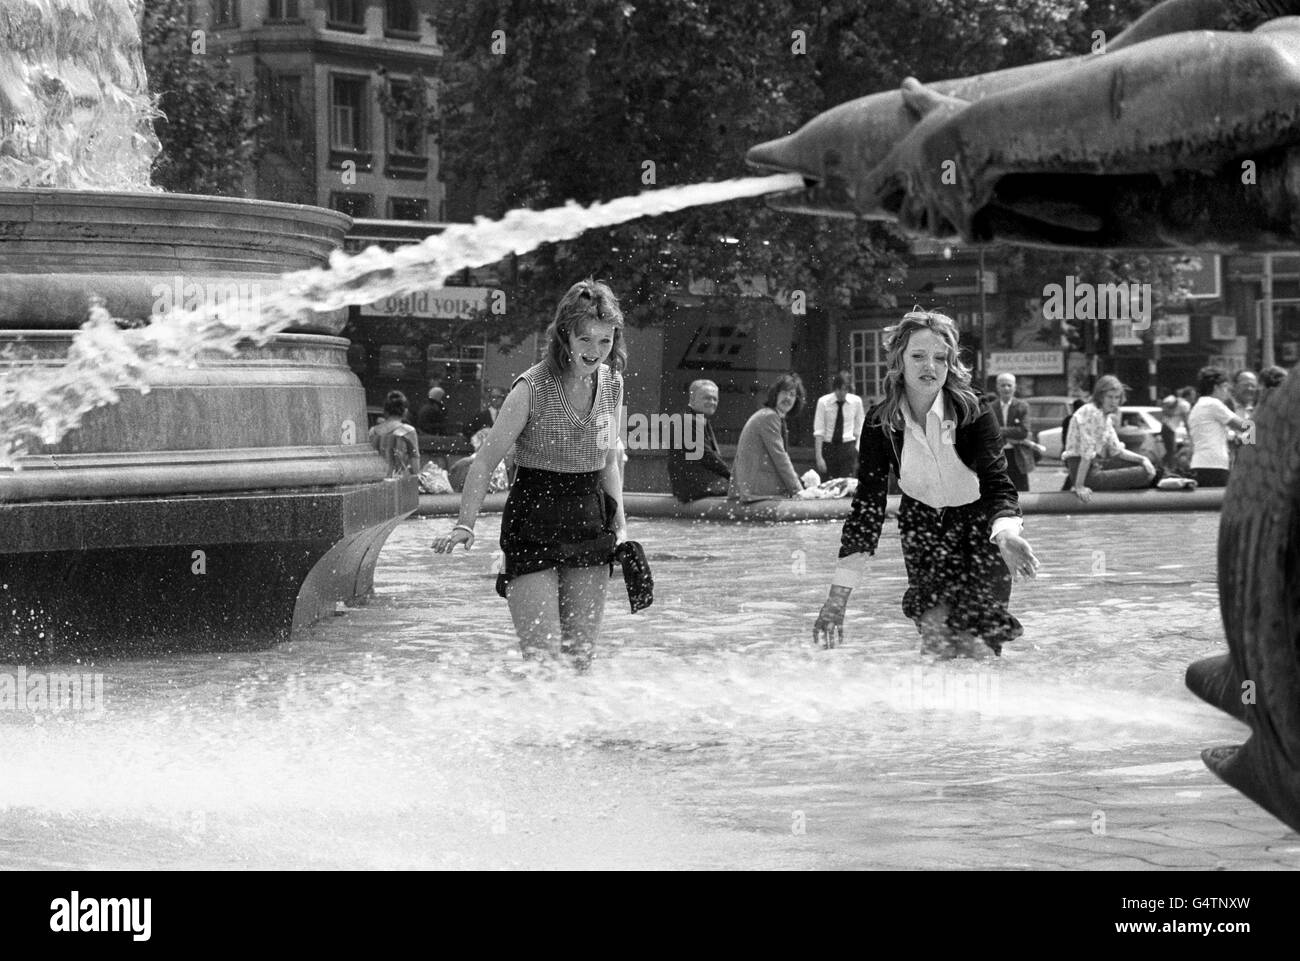 Landmarks - Fountain in Trafalgar Square - 1975 Stock Photo